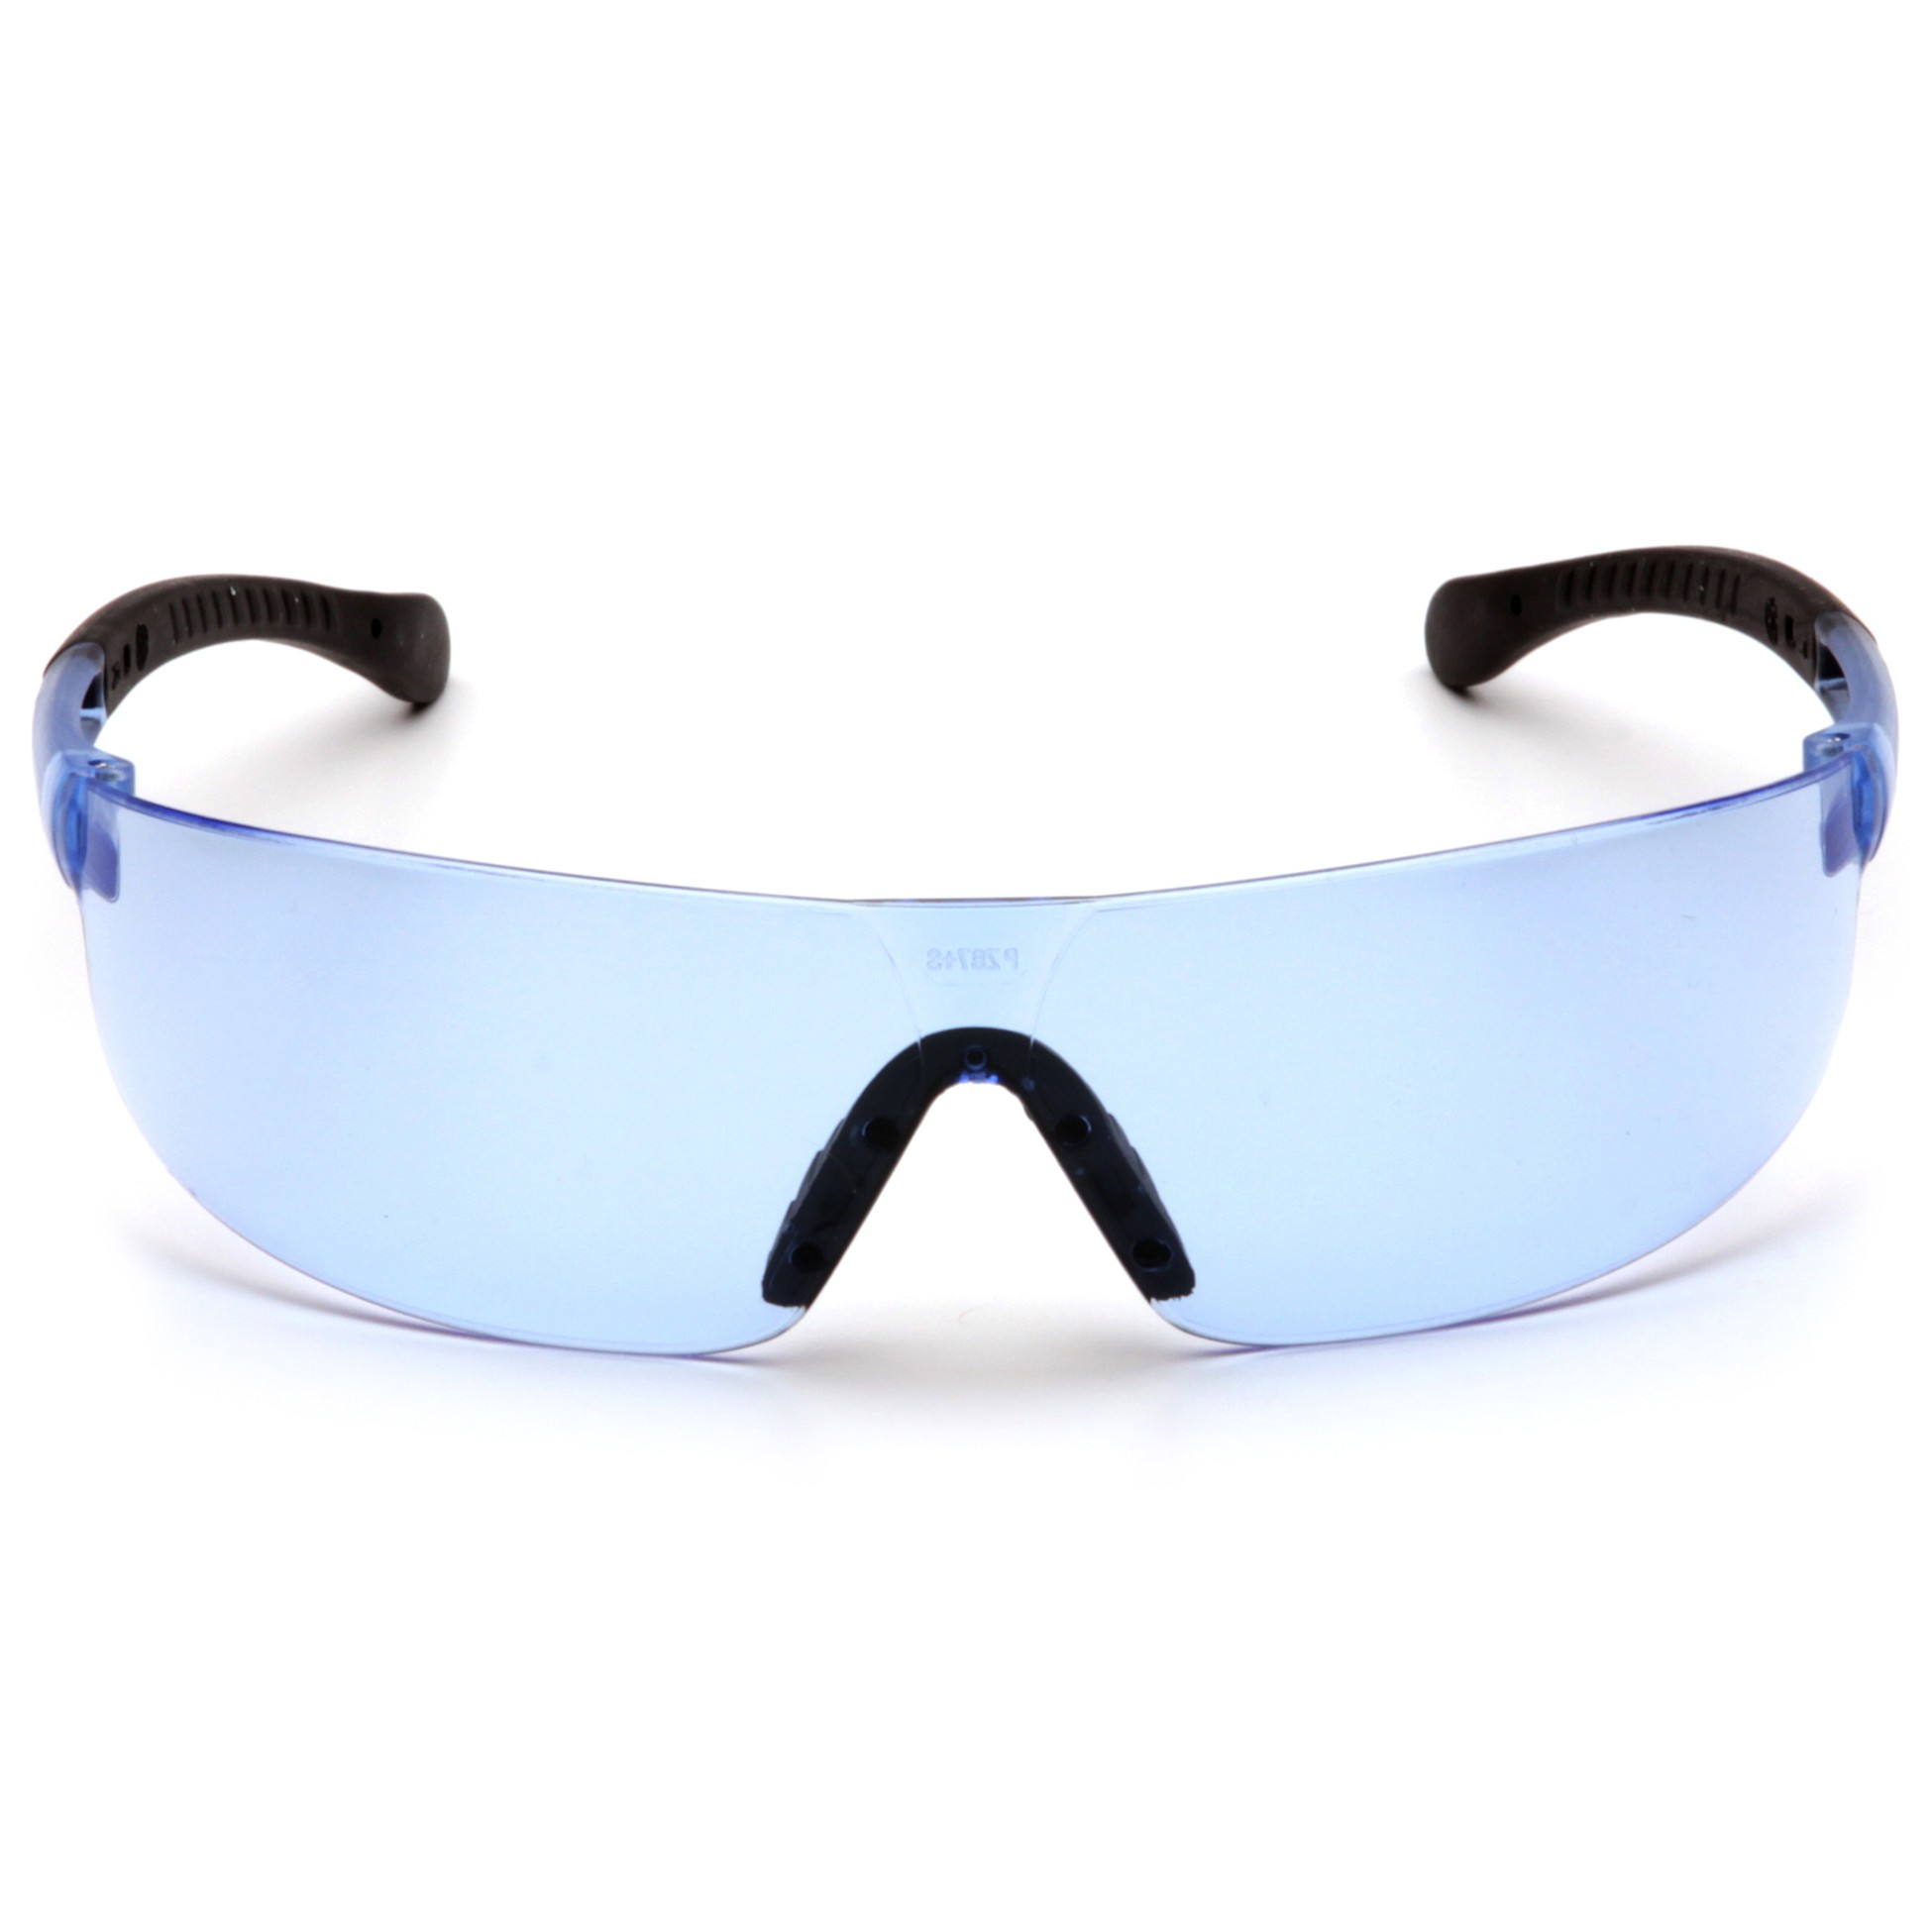 Black Temples Full Source Meshweaver Safety Glasses with Blue Lens